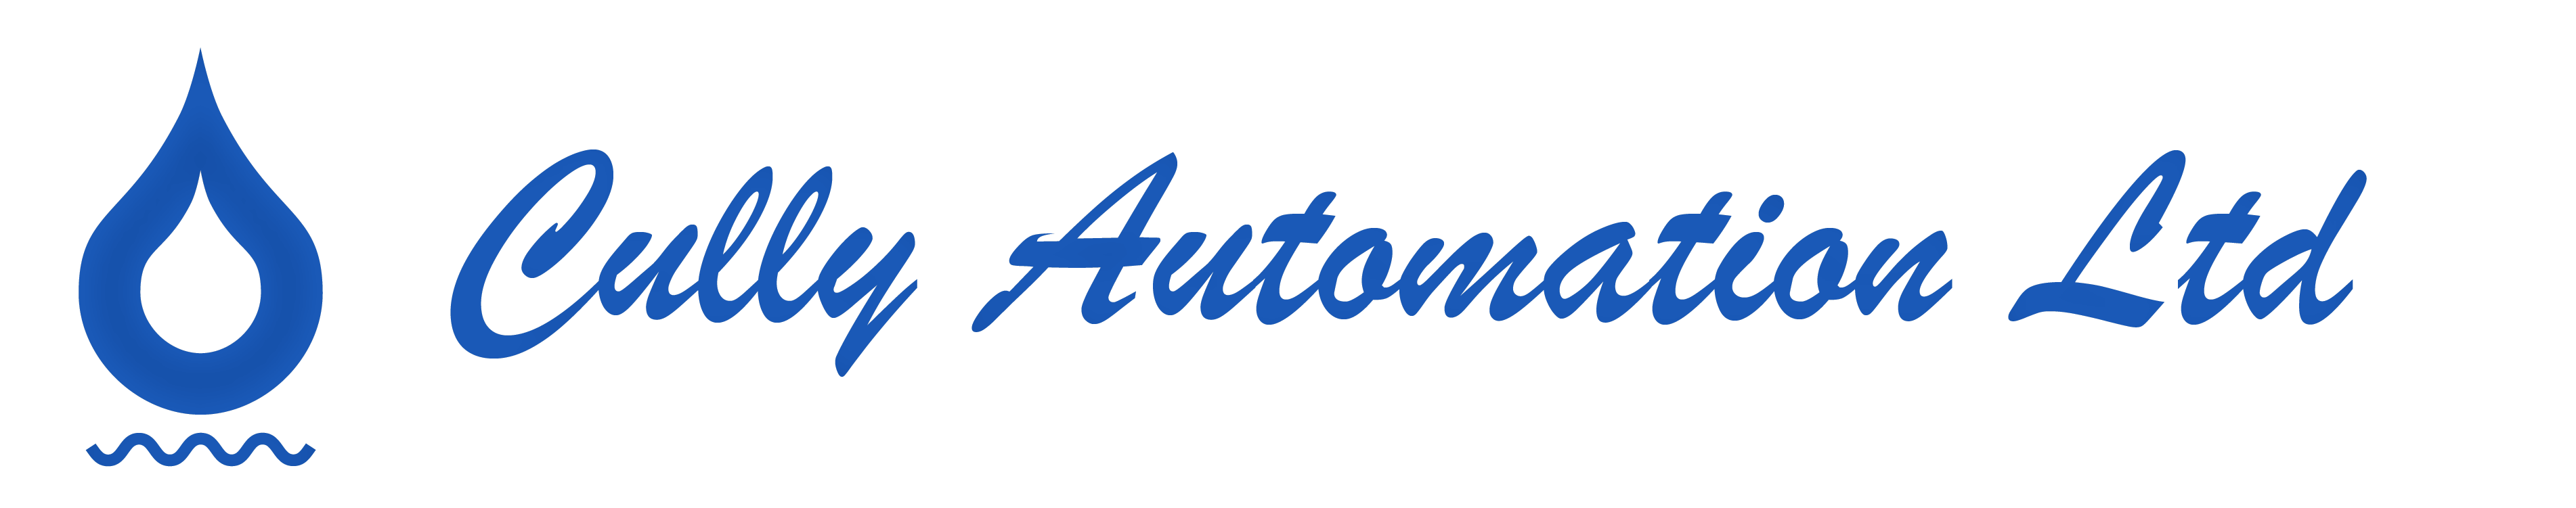 Логотип Cully Automation Ltd